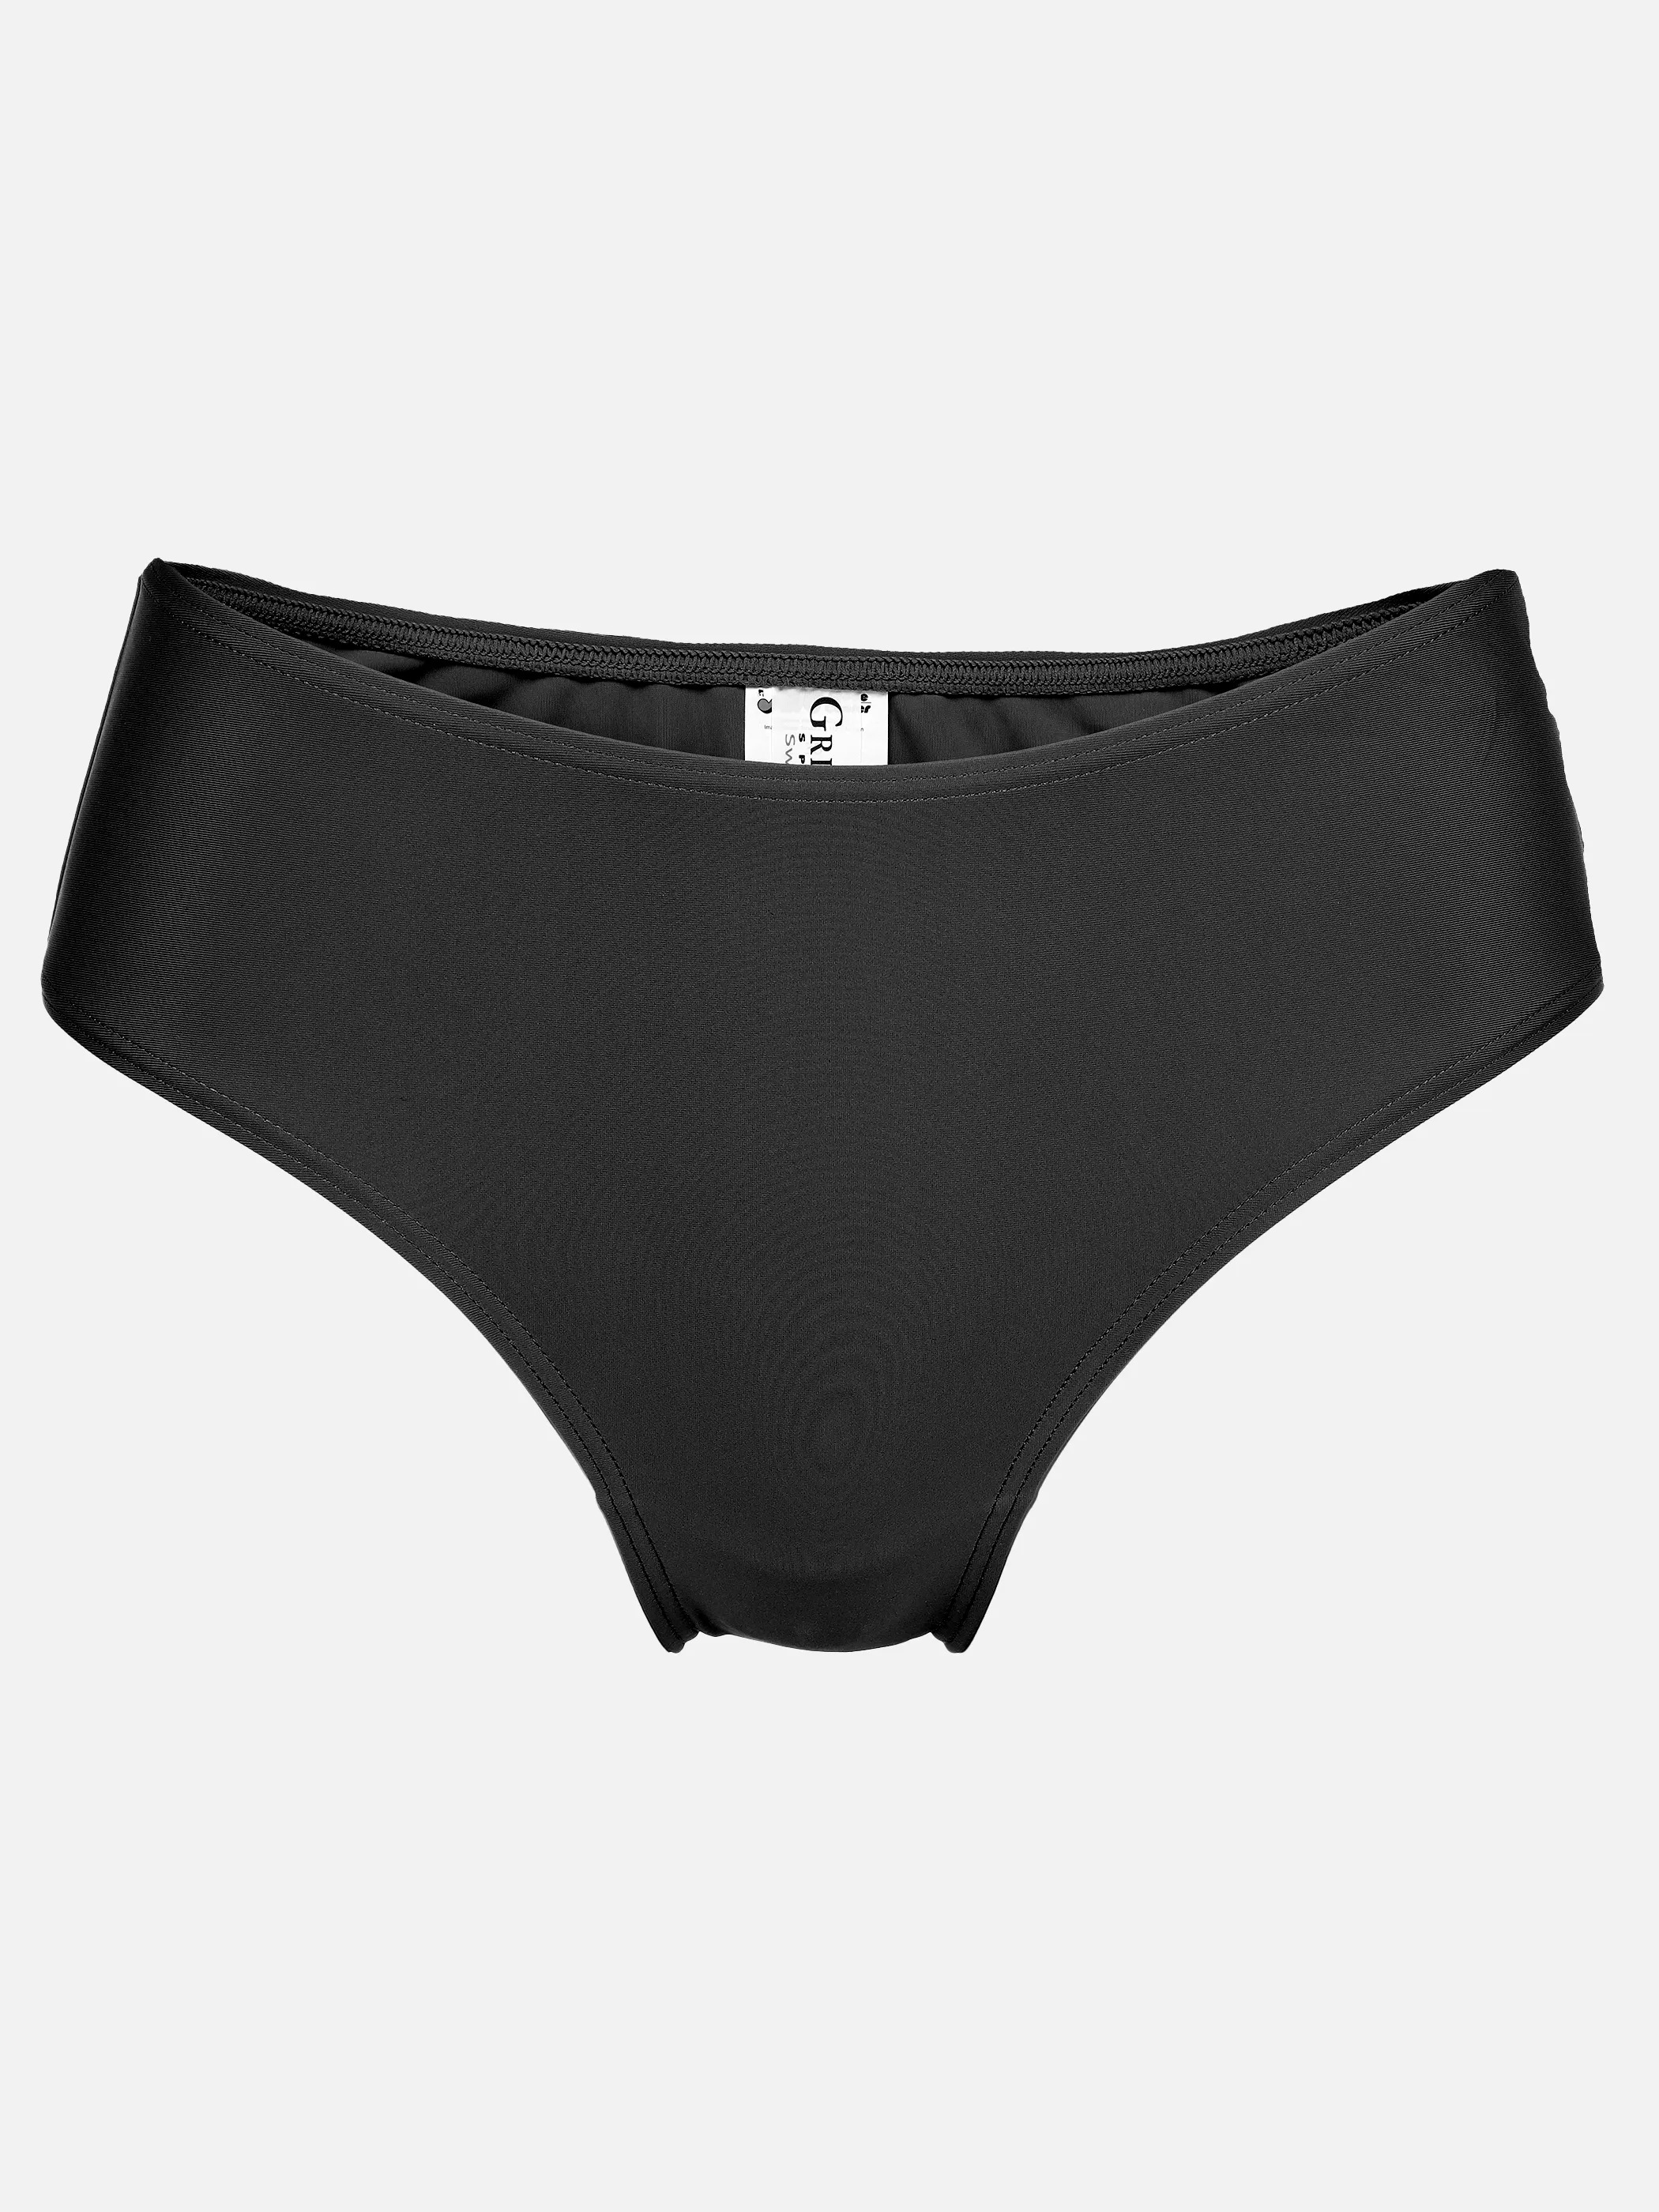 Grinario Sports Da-Bikini Hose Schwarz 890112 BLACK 1